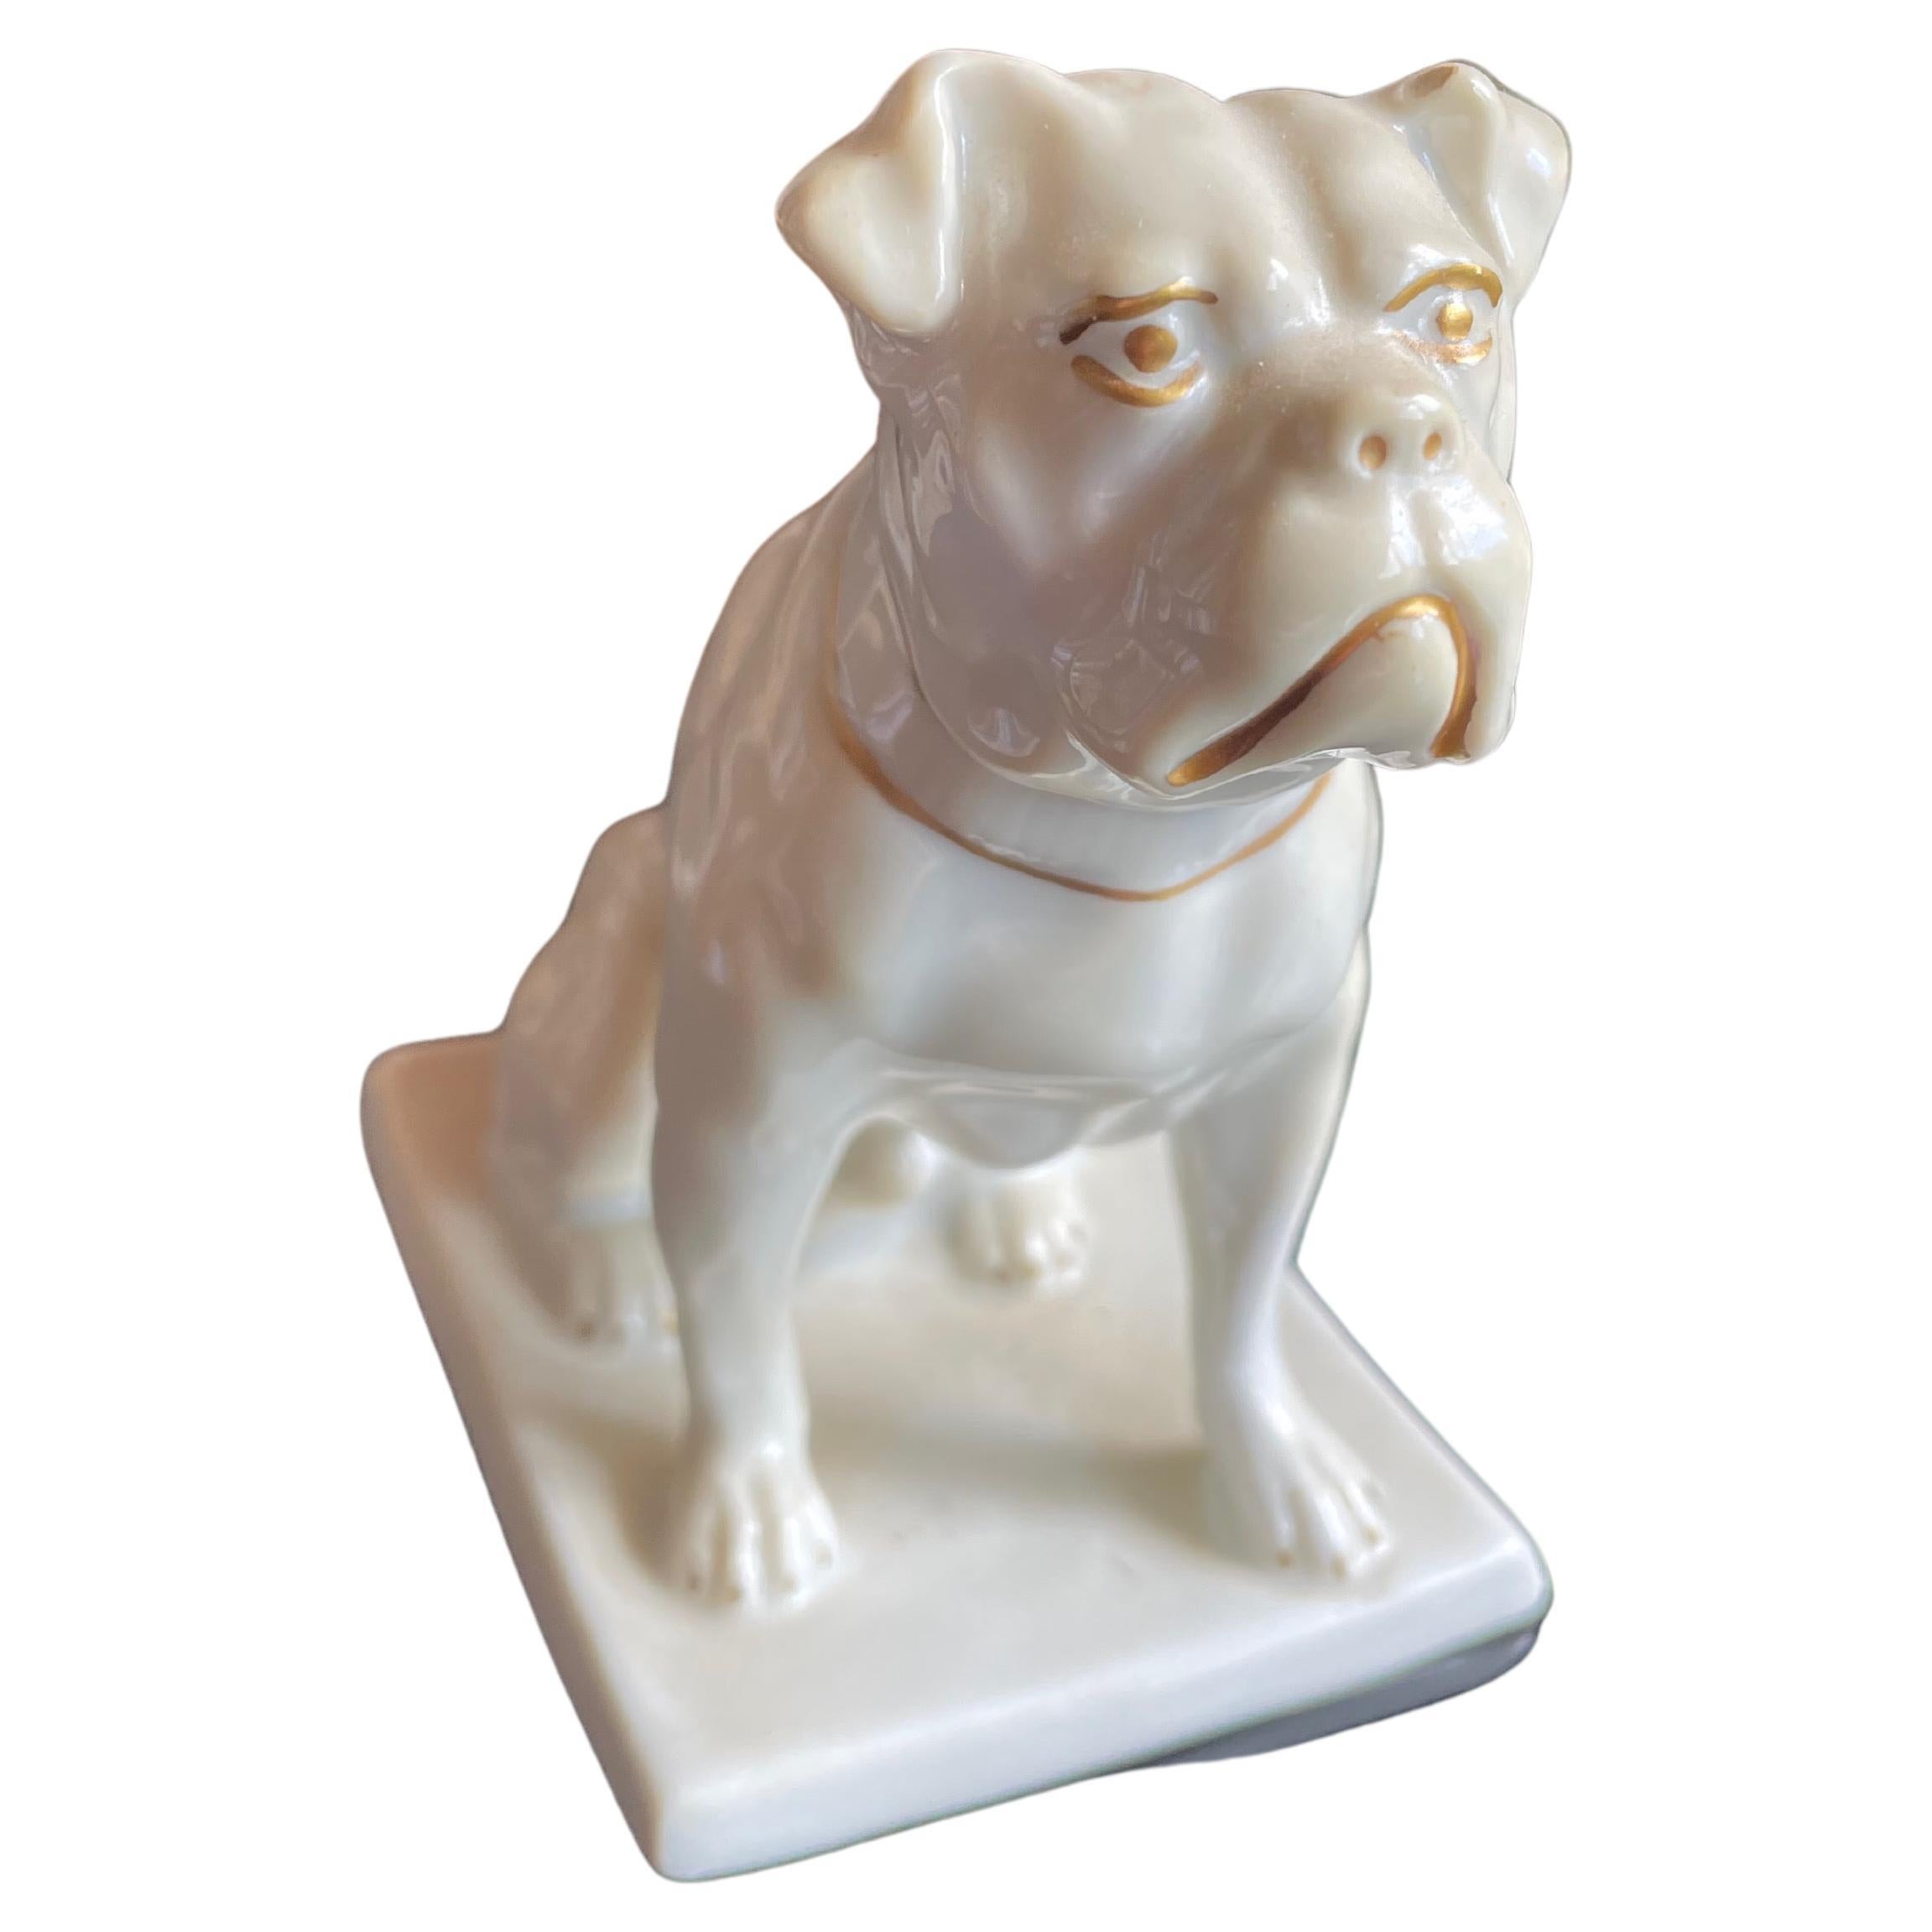 Art Déco porcelain figurine" Sitting bulldog" . Germany 1920s. Signed. For Sale